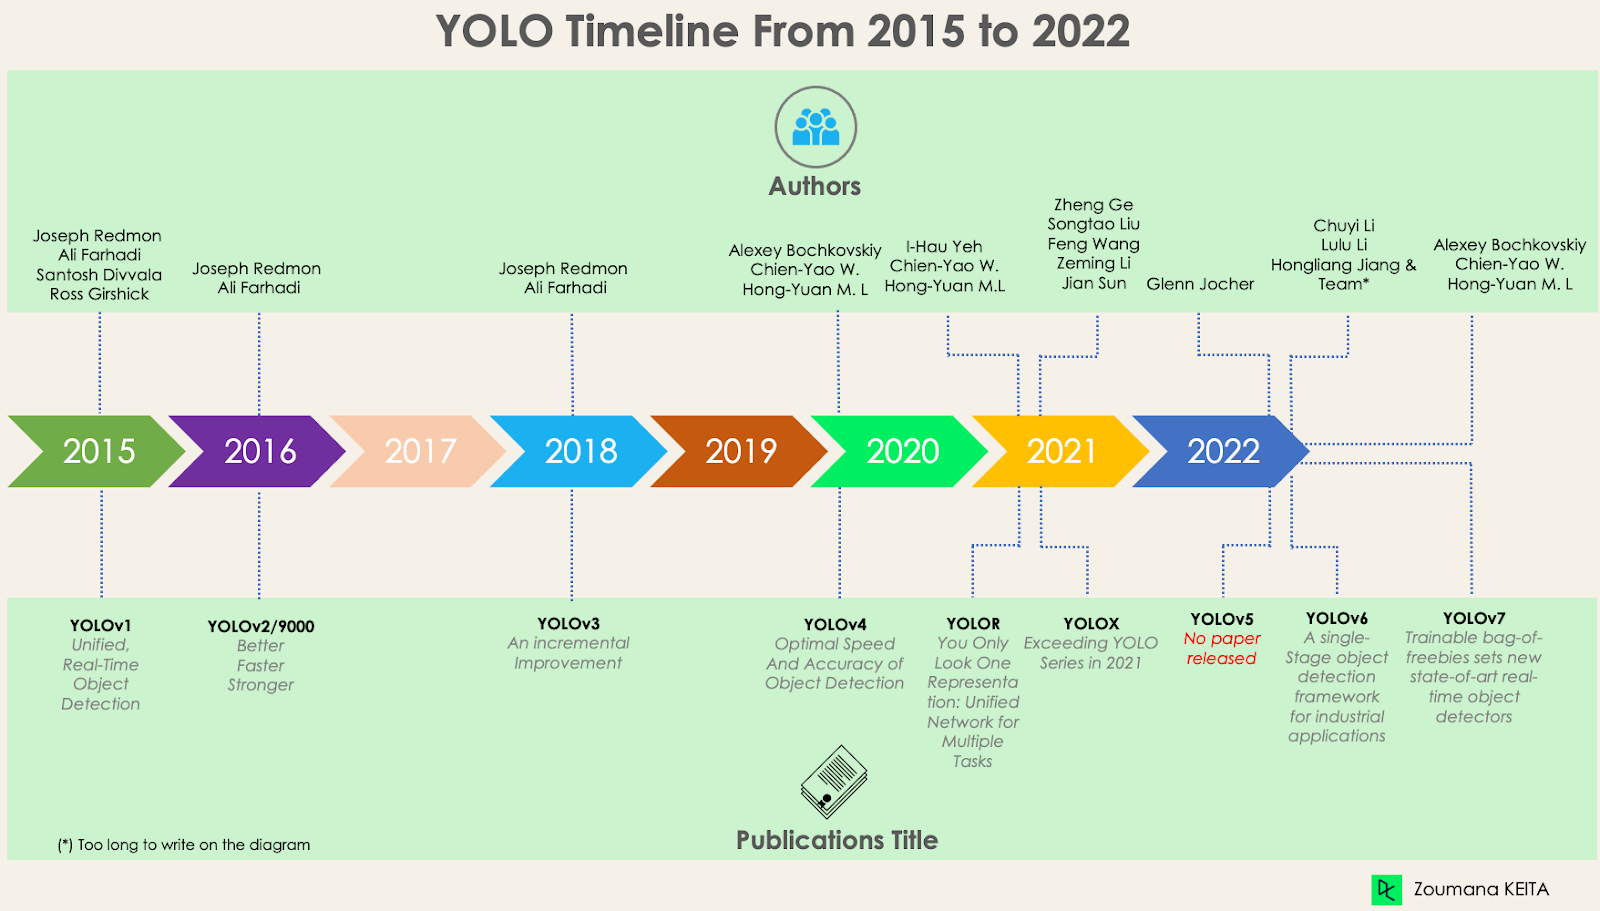 YOLO Timeframe 2015 to 2022